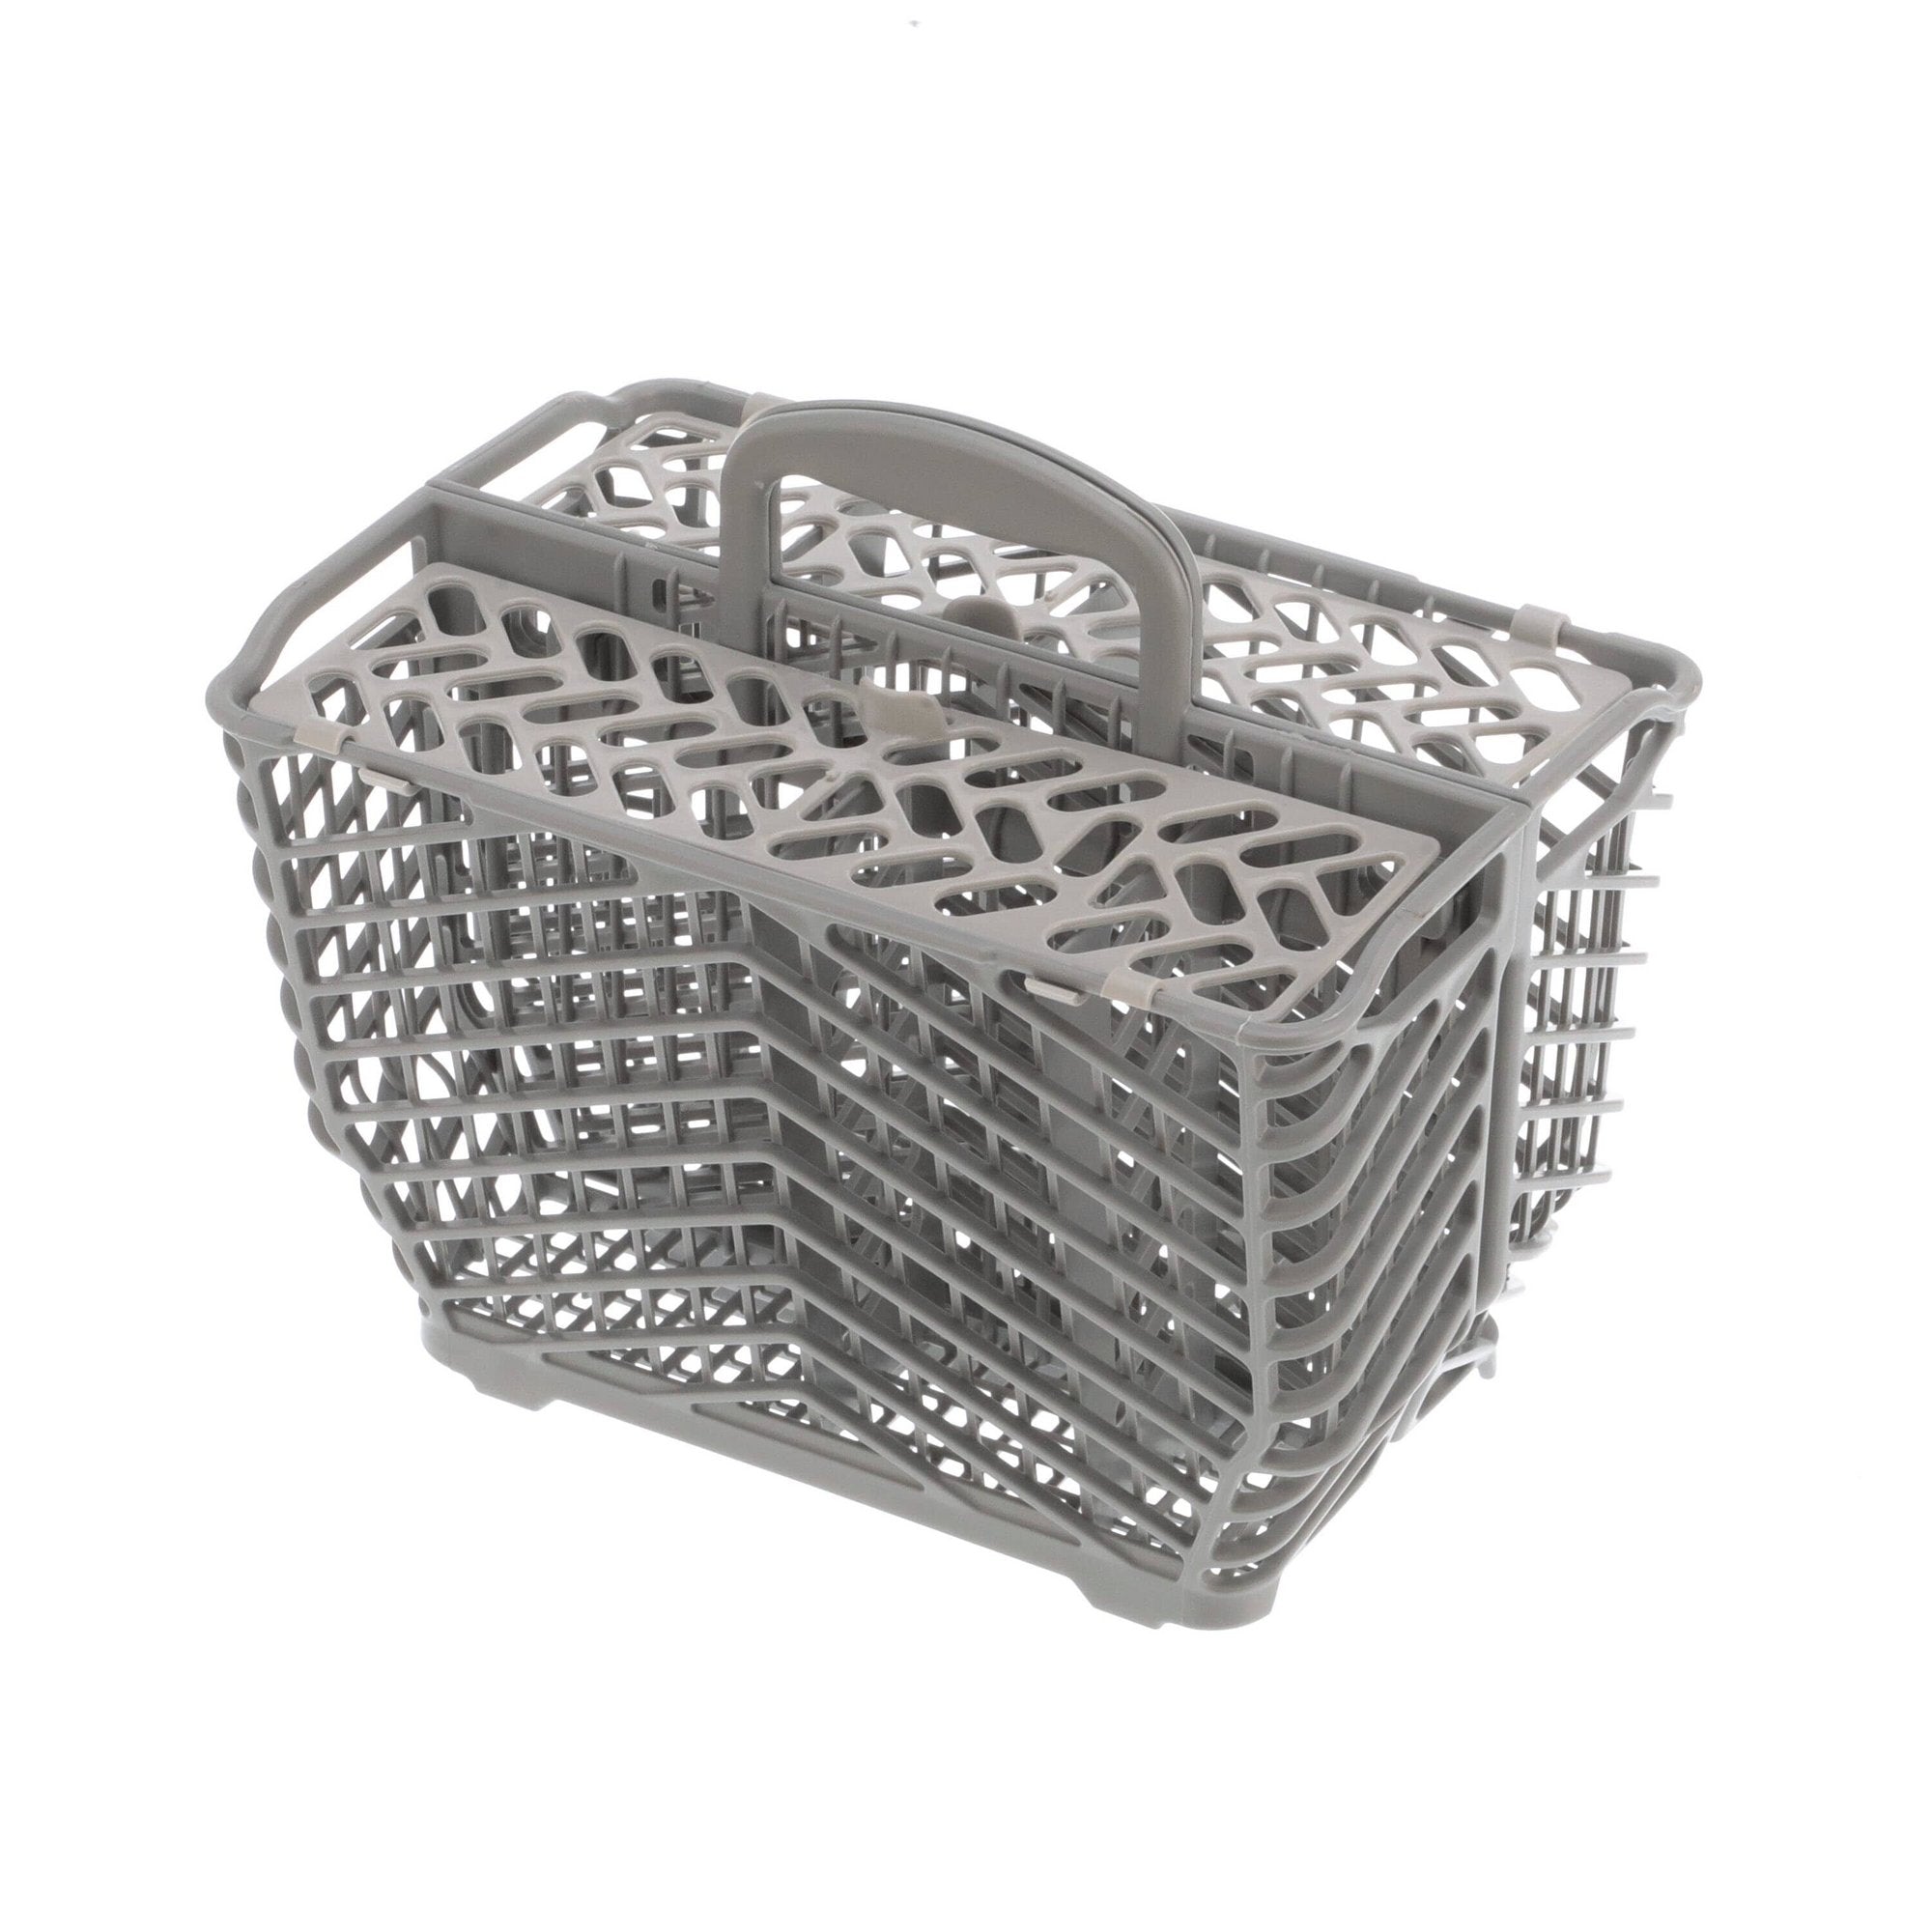 Whirlpool Dishwasher Silverware Basket - 6-918651 New